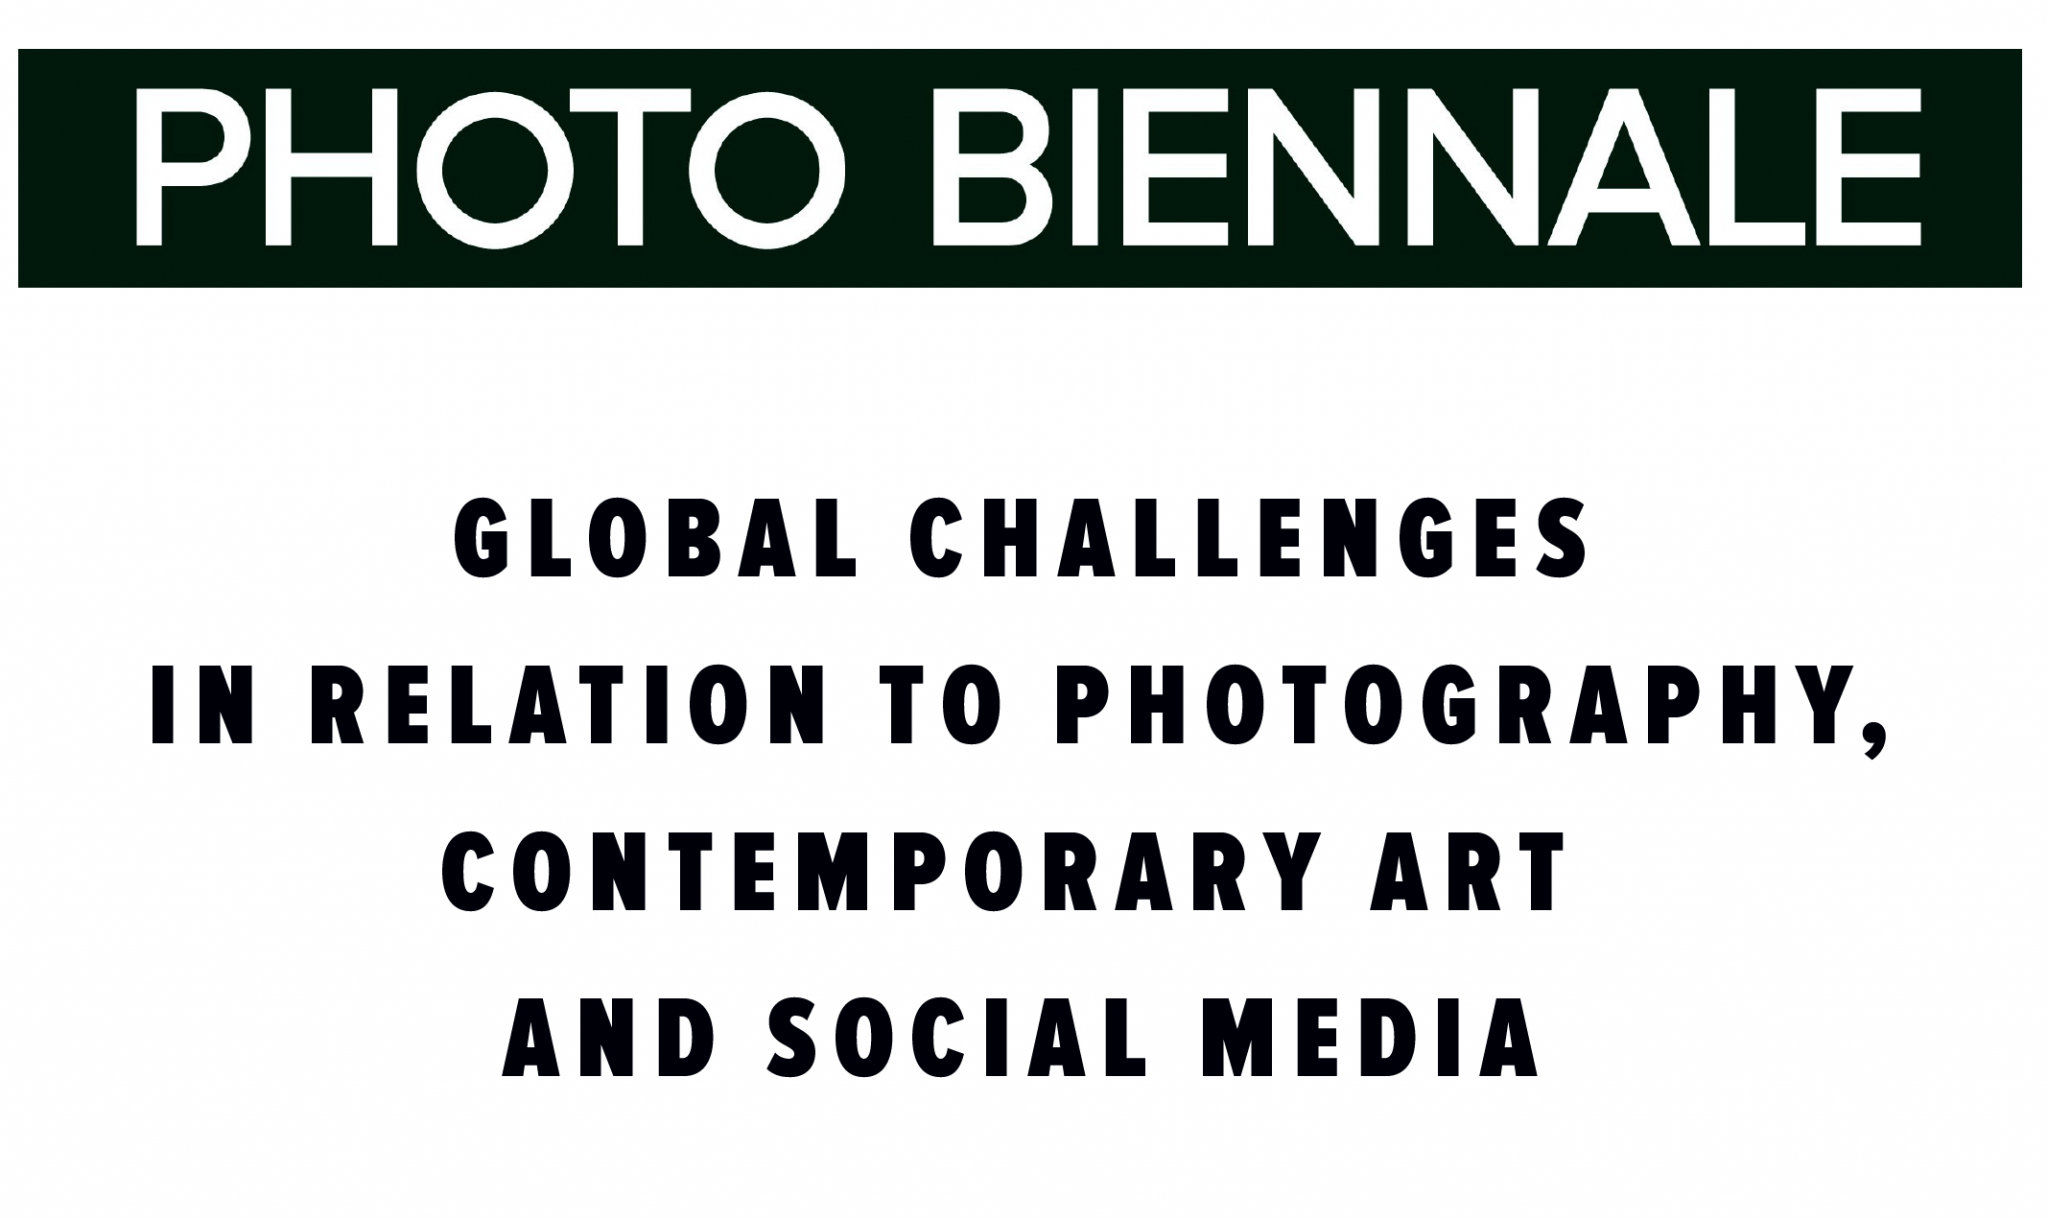 Photo-Biennale-1024x609@2x.png